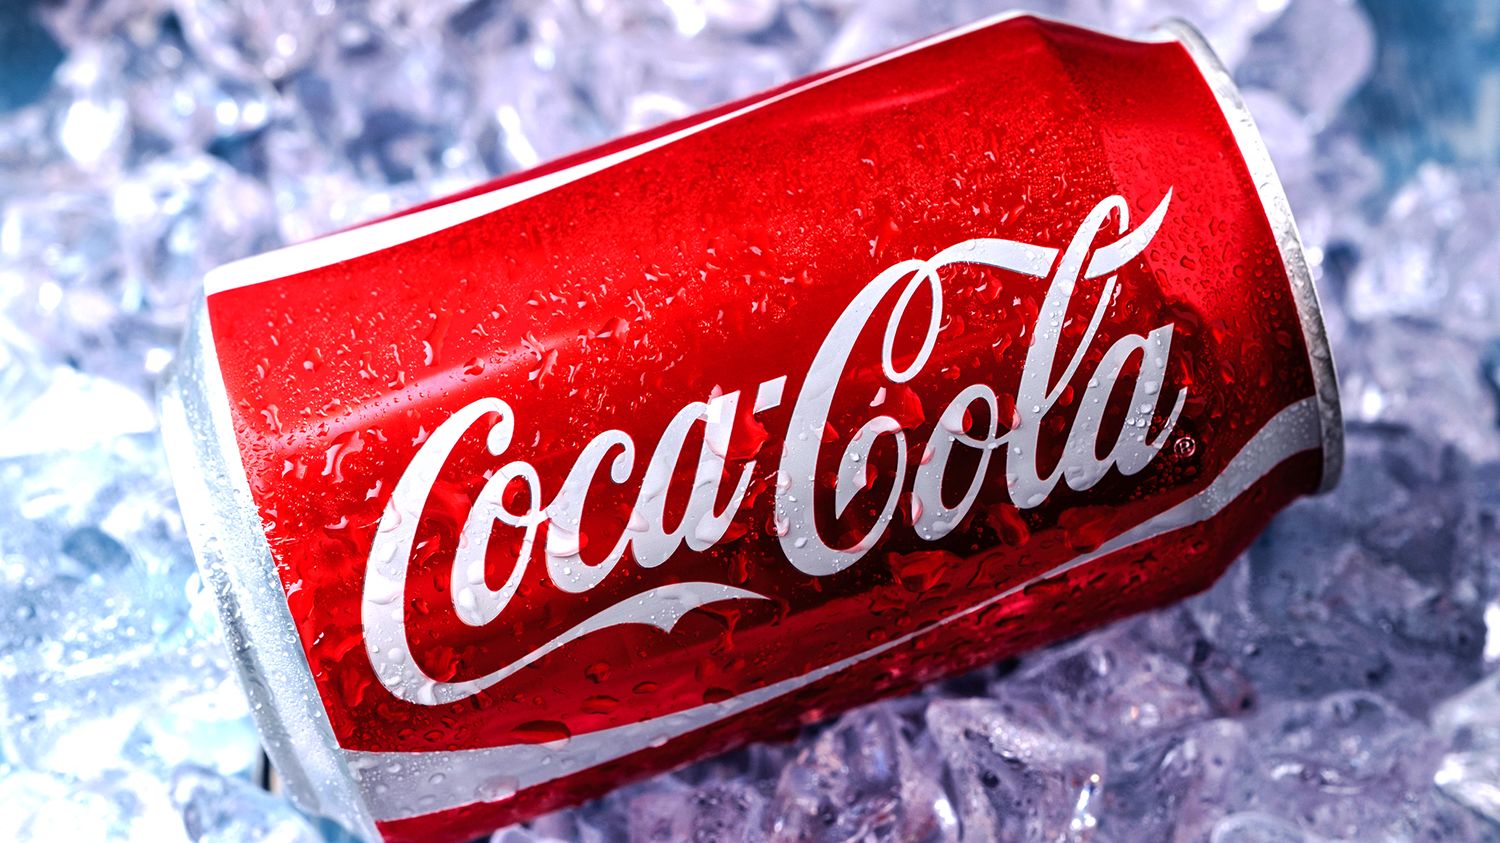 Coca cola 46